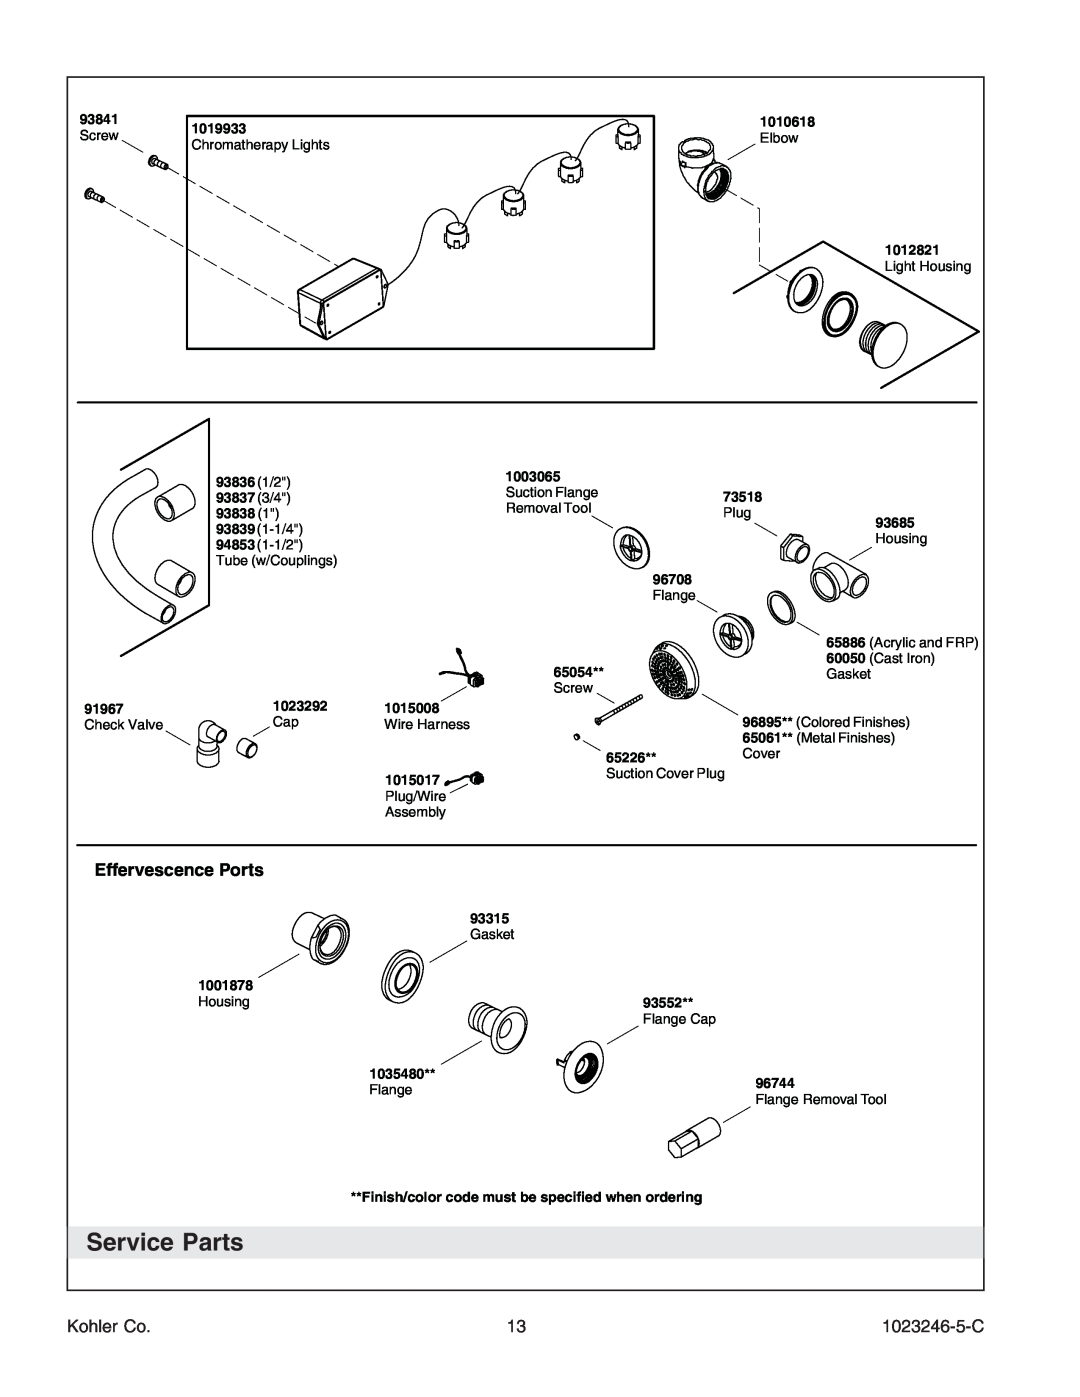 Kohler K-1418-CT manual Service Parts, Effervescence Ports 